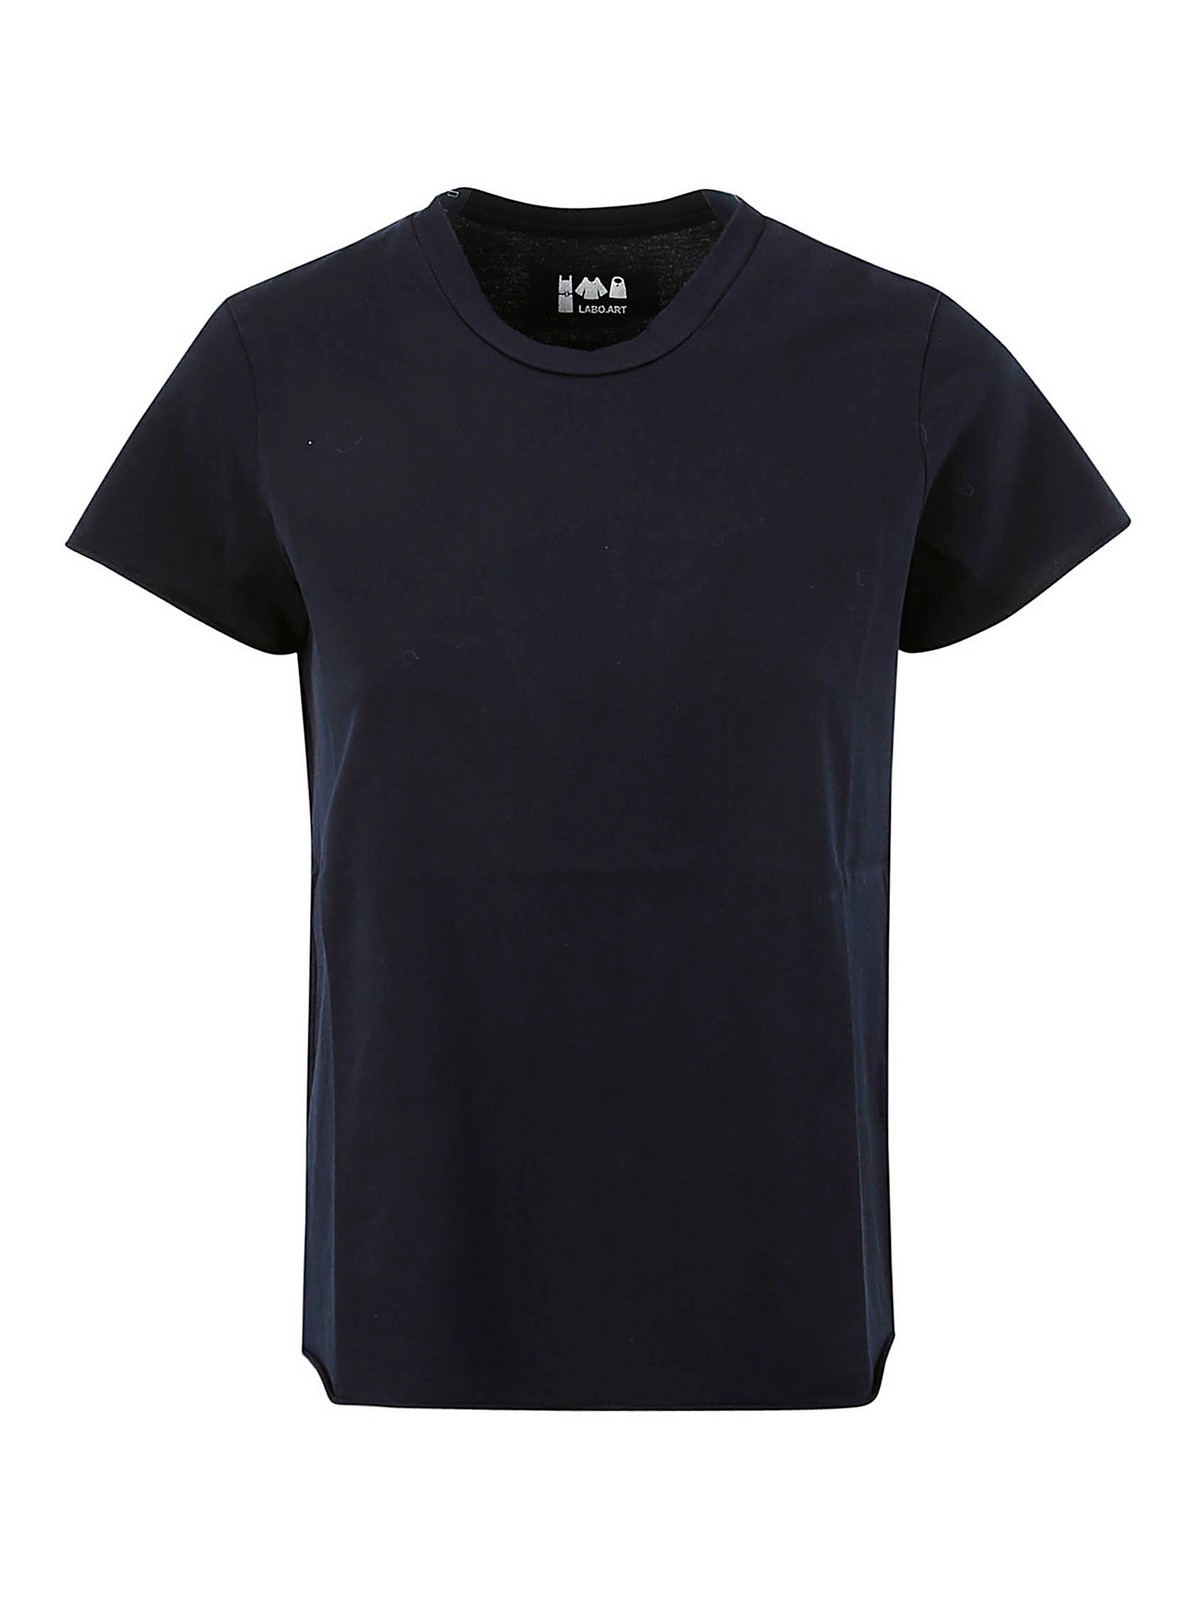 Labo.art Cotton T-shirt In Black